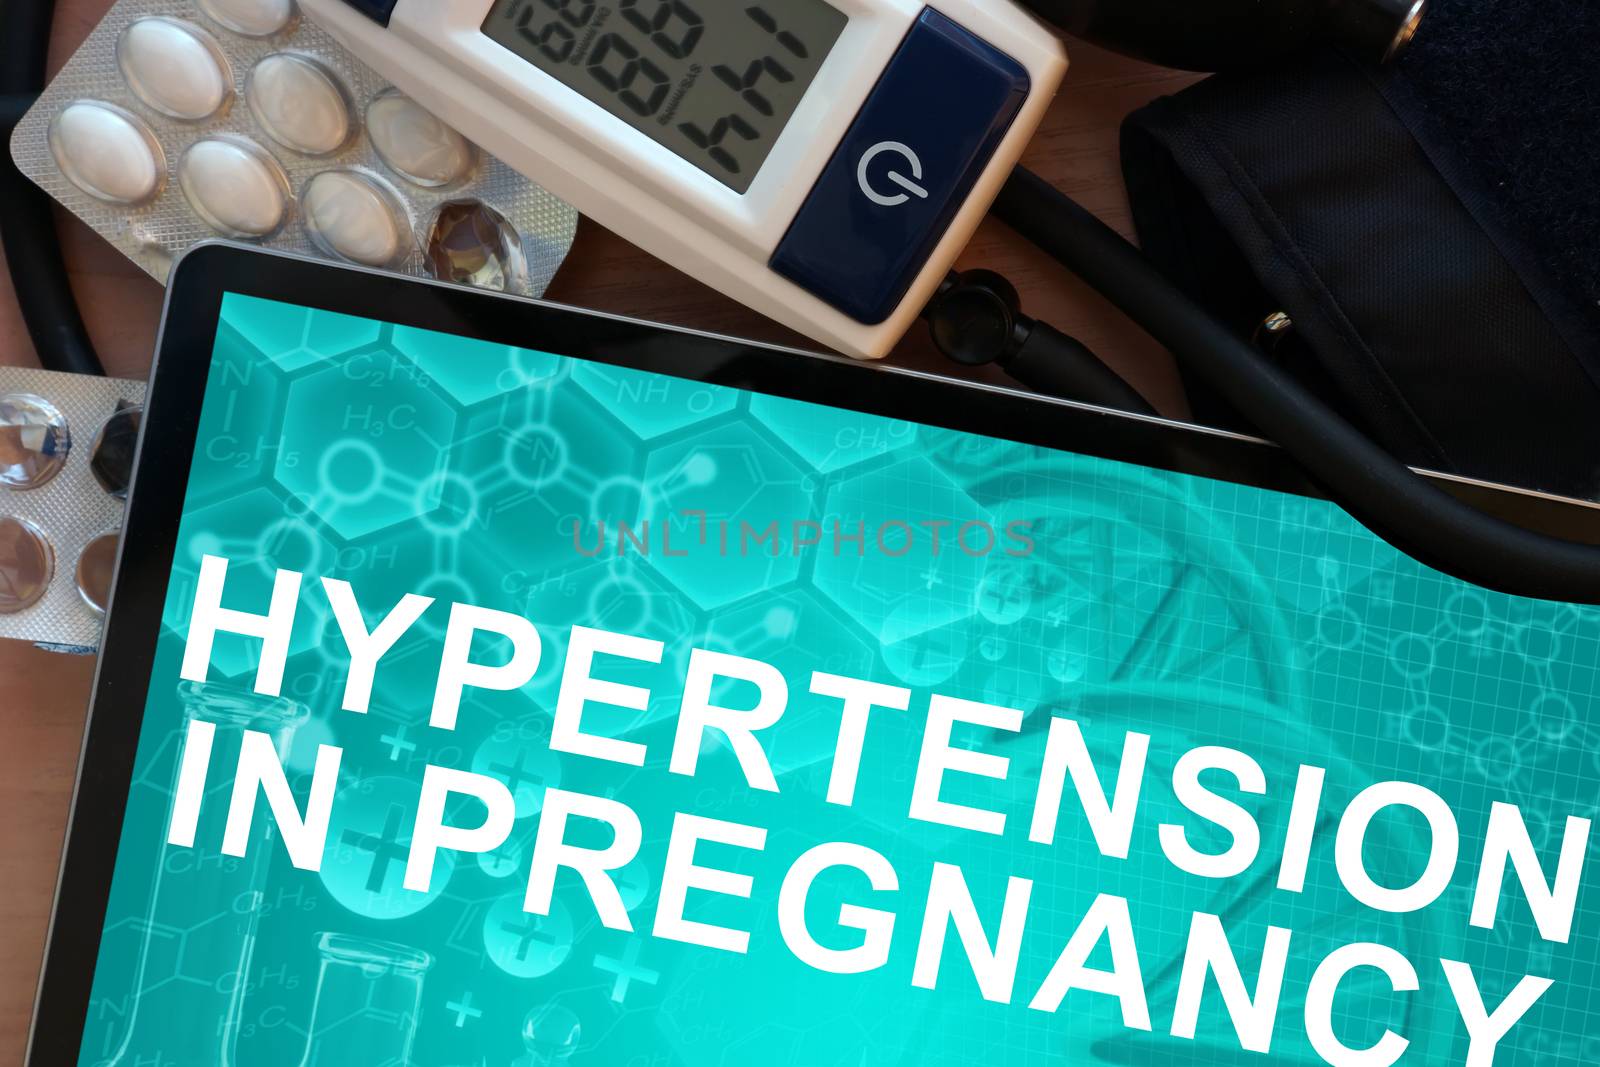 Hypertension In Pregnancy by designer491